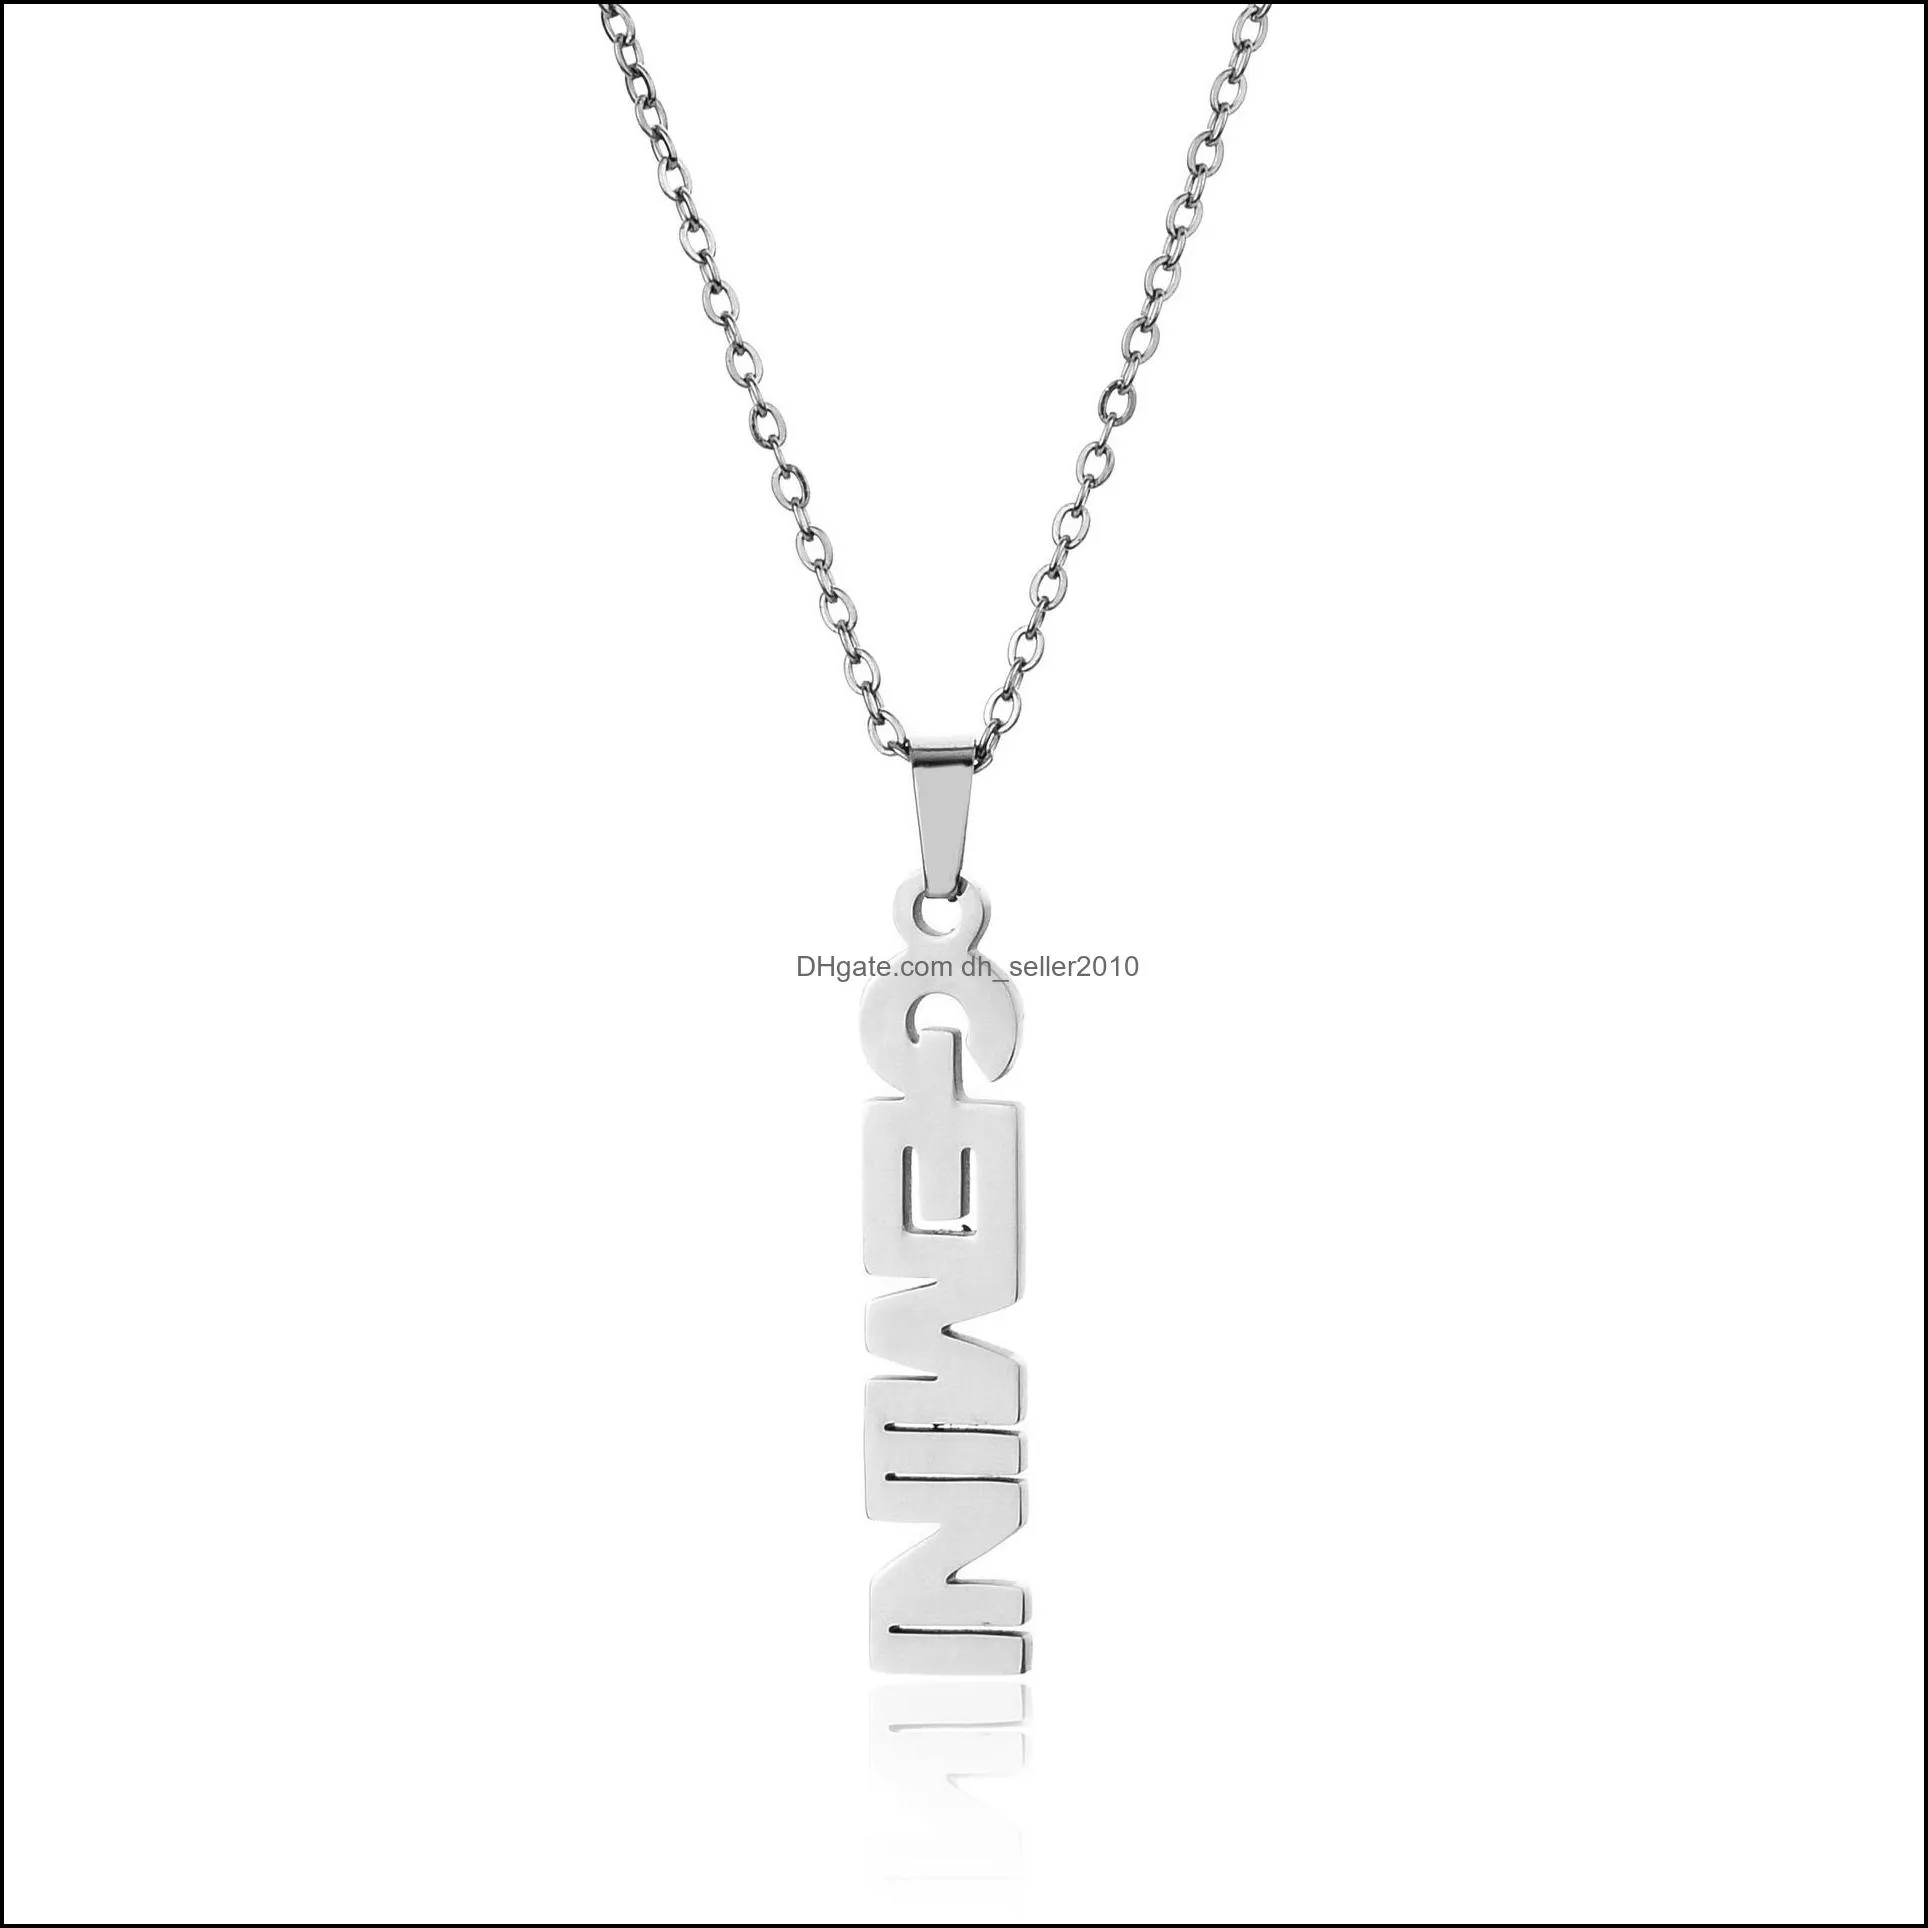  est arrival twelve constellation english letter pendant necklace titanium steels plated18k clavicle chain neck jewelry